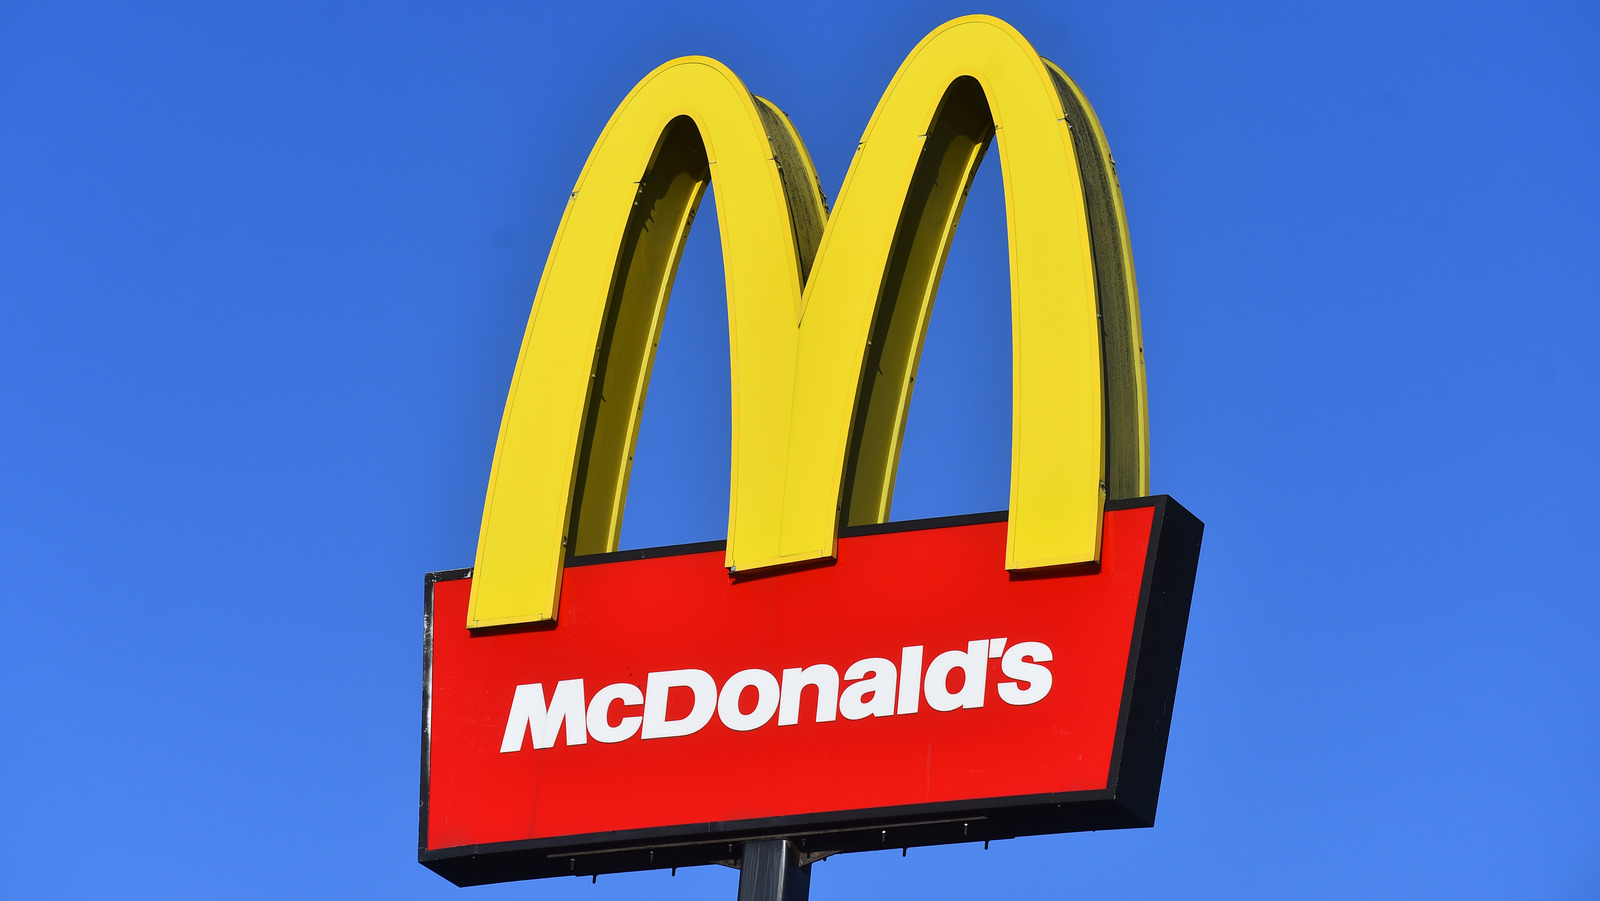 McDonald's Is Bringing Back This Popular BOGO Meal Deal